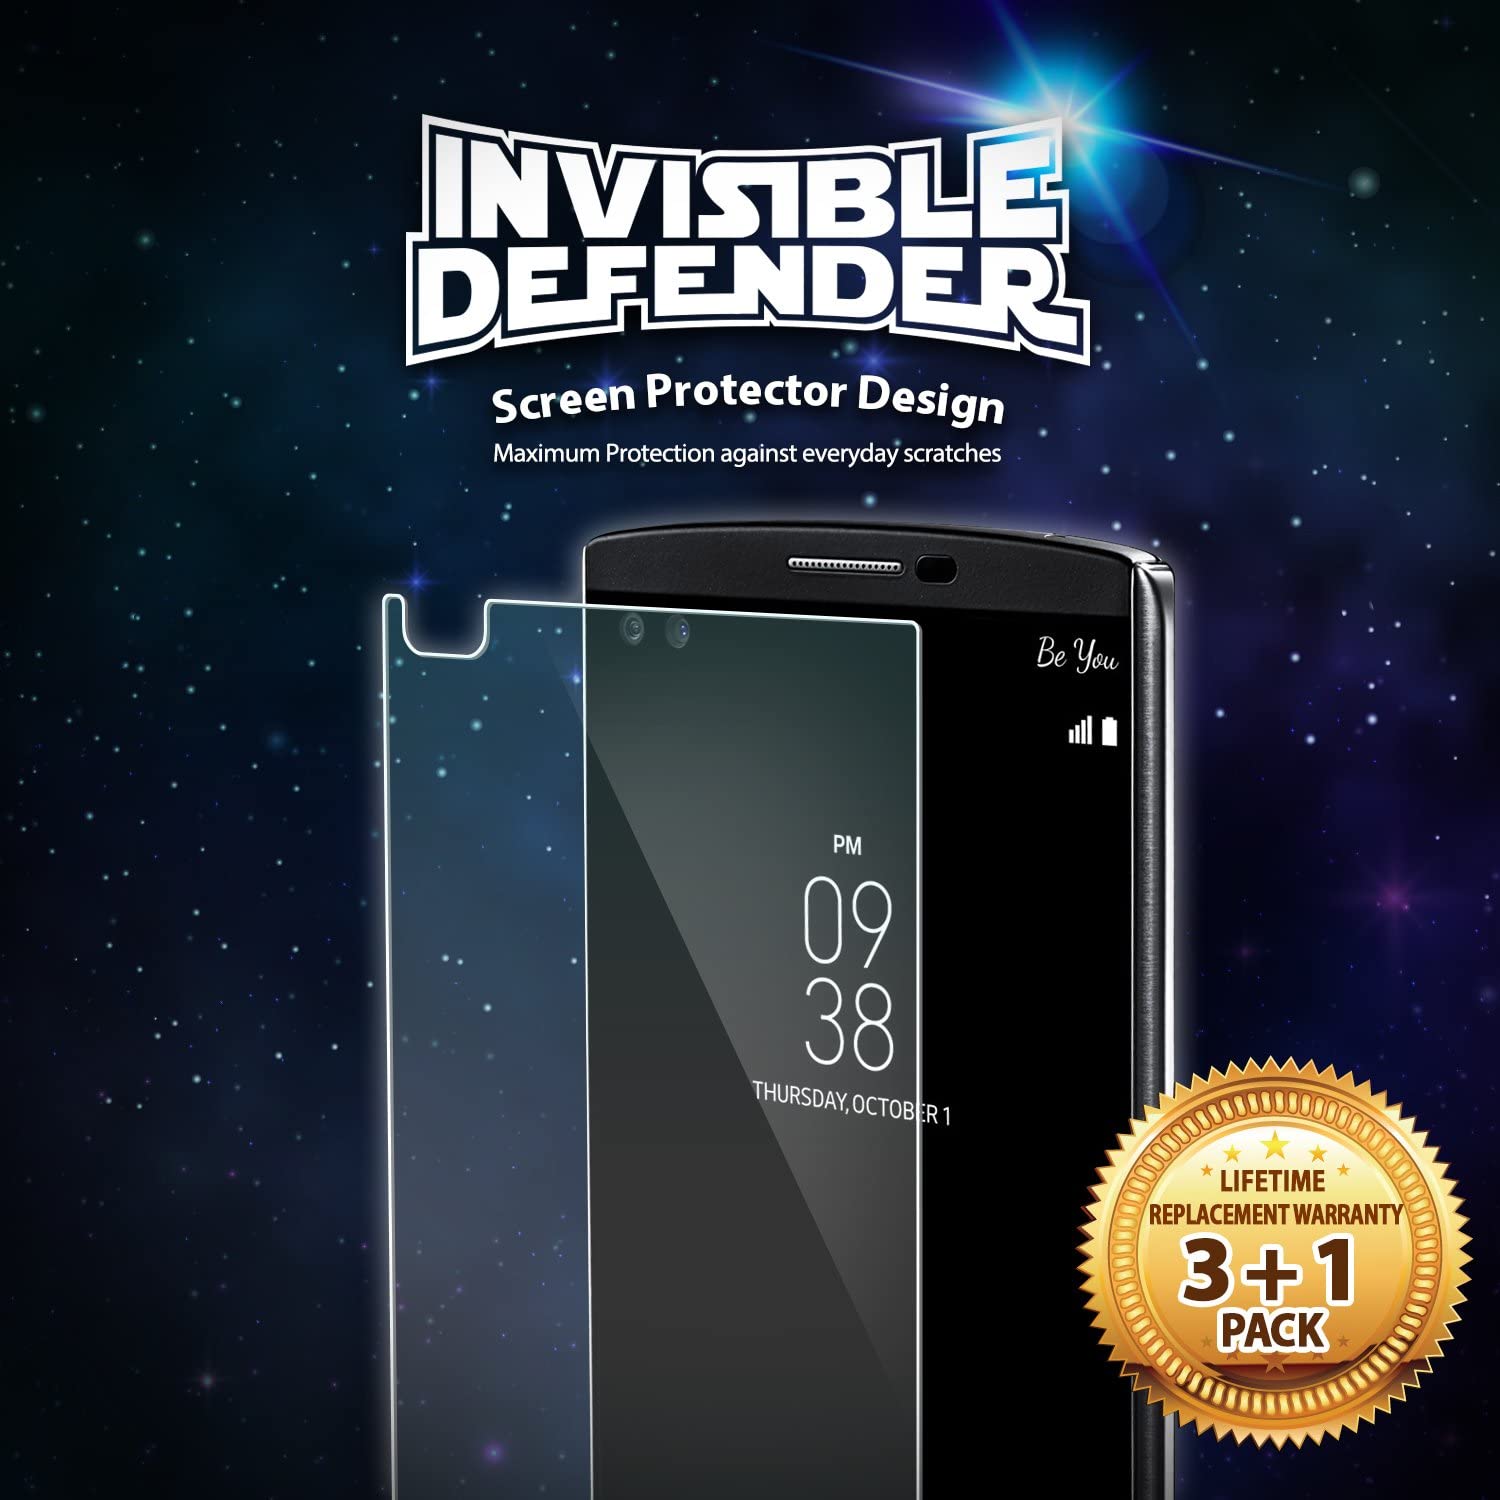 lg v10 screen protector - ringke invisible defender